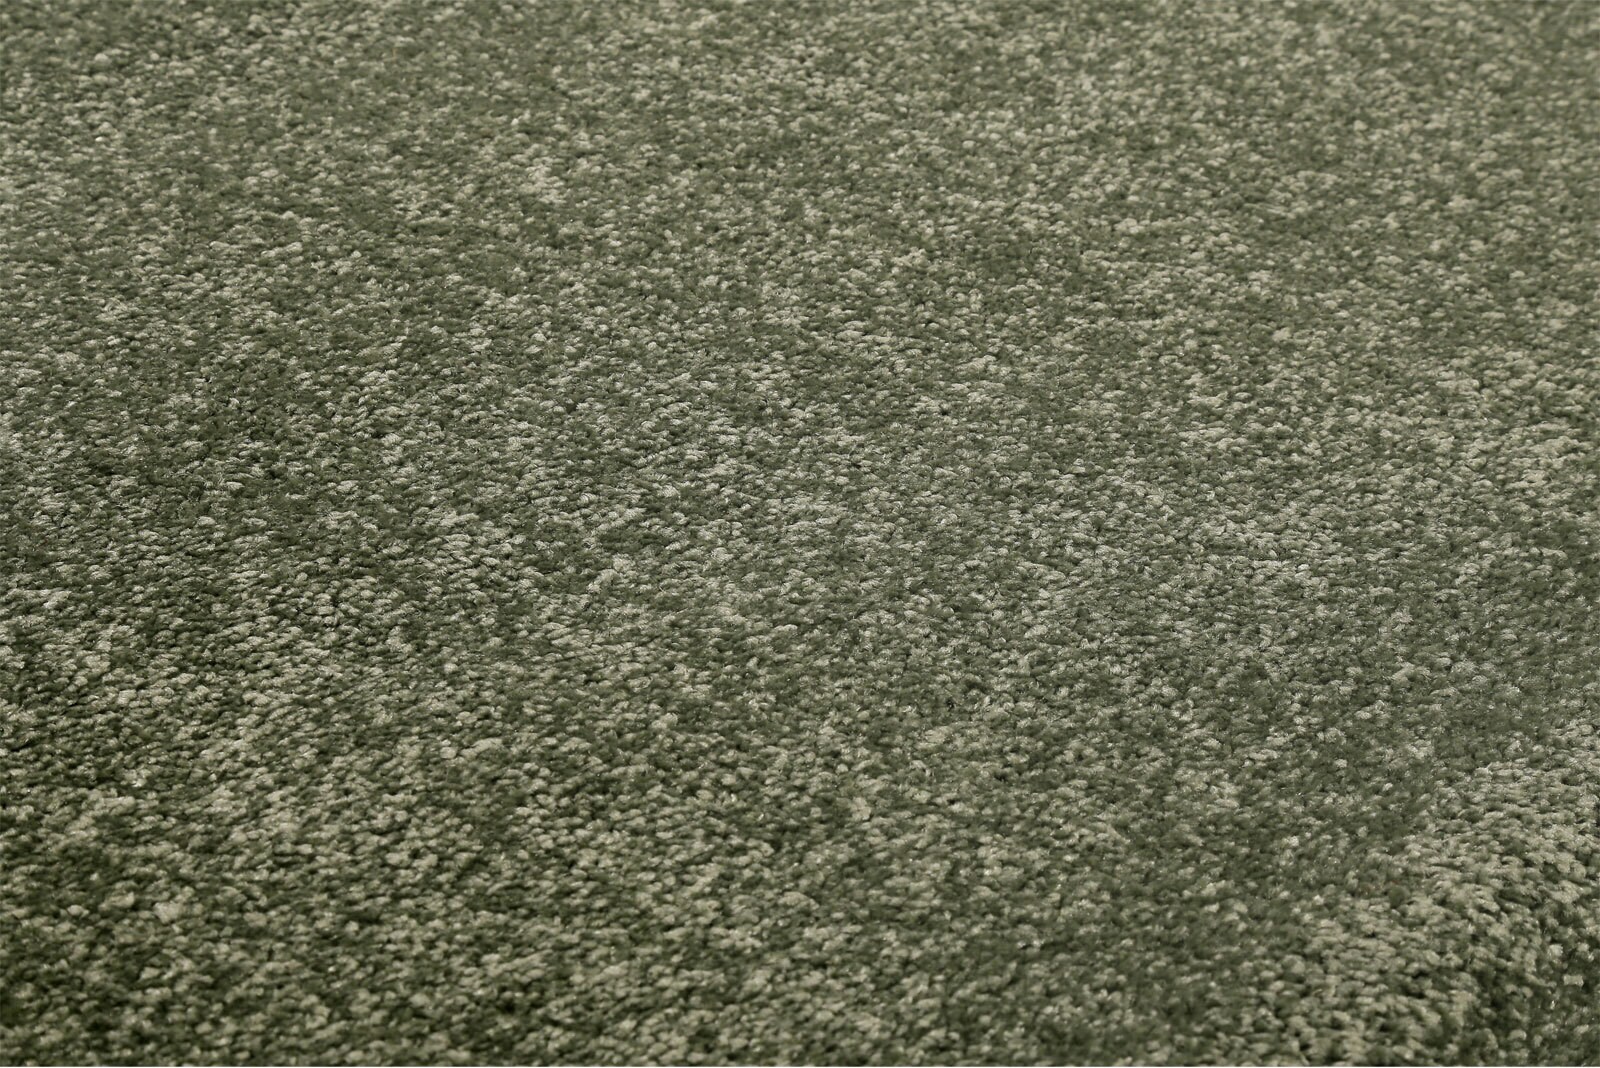 Teppich CALIFORNIA 80 x 150 cm salbeigrün 